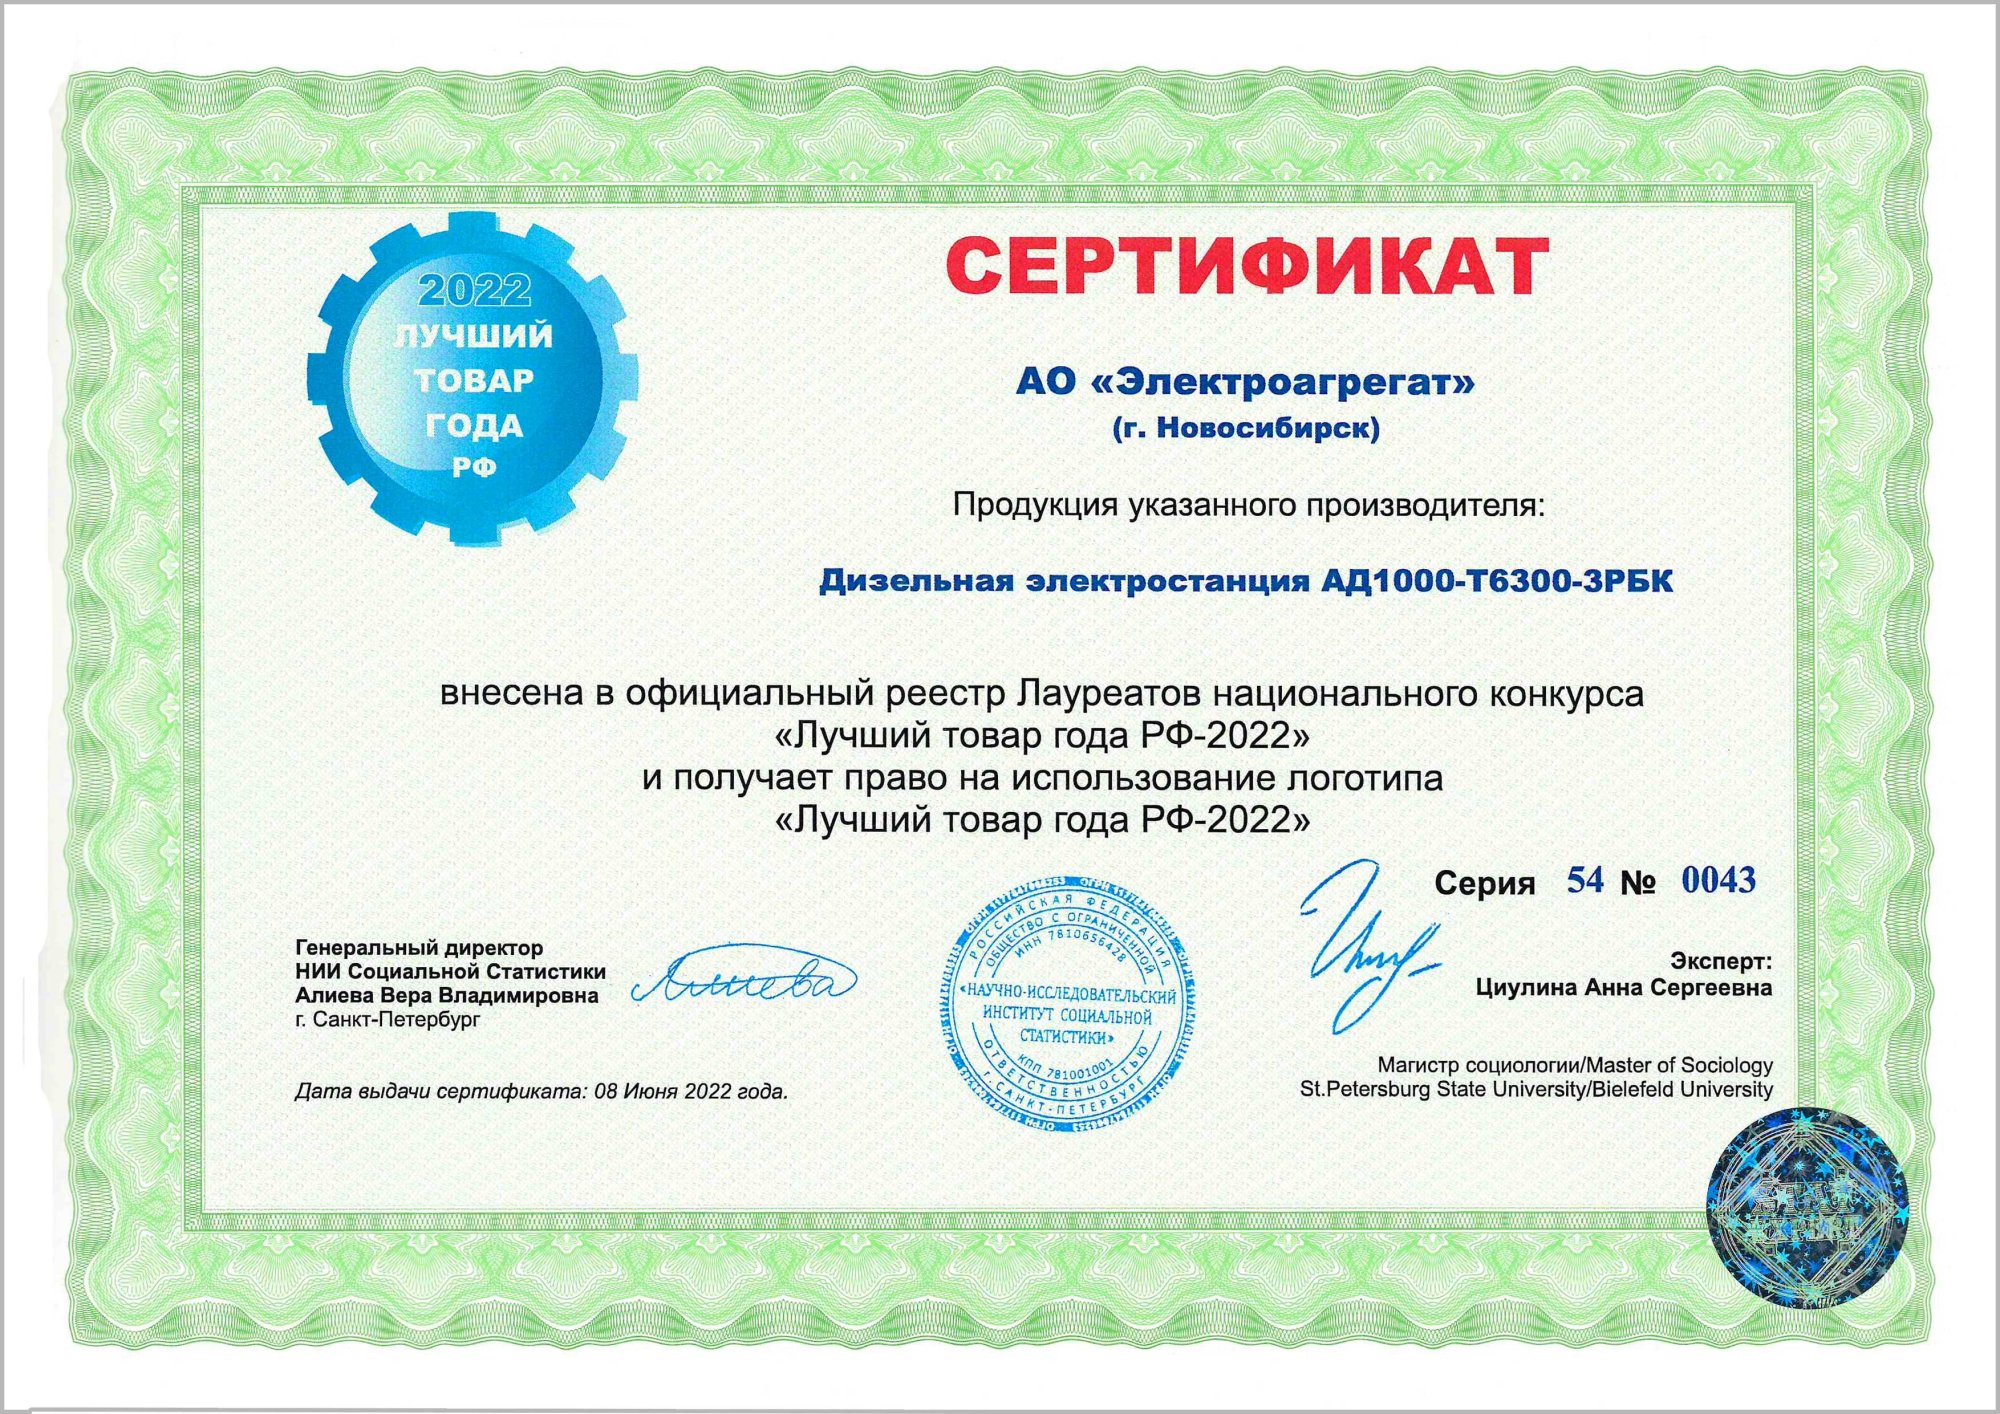 Сертификат АО Электроагрегат на ДГУ АД1000-Т6300-3РБК. Лучший товар года 2022